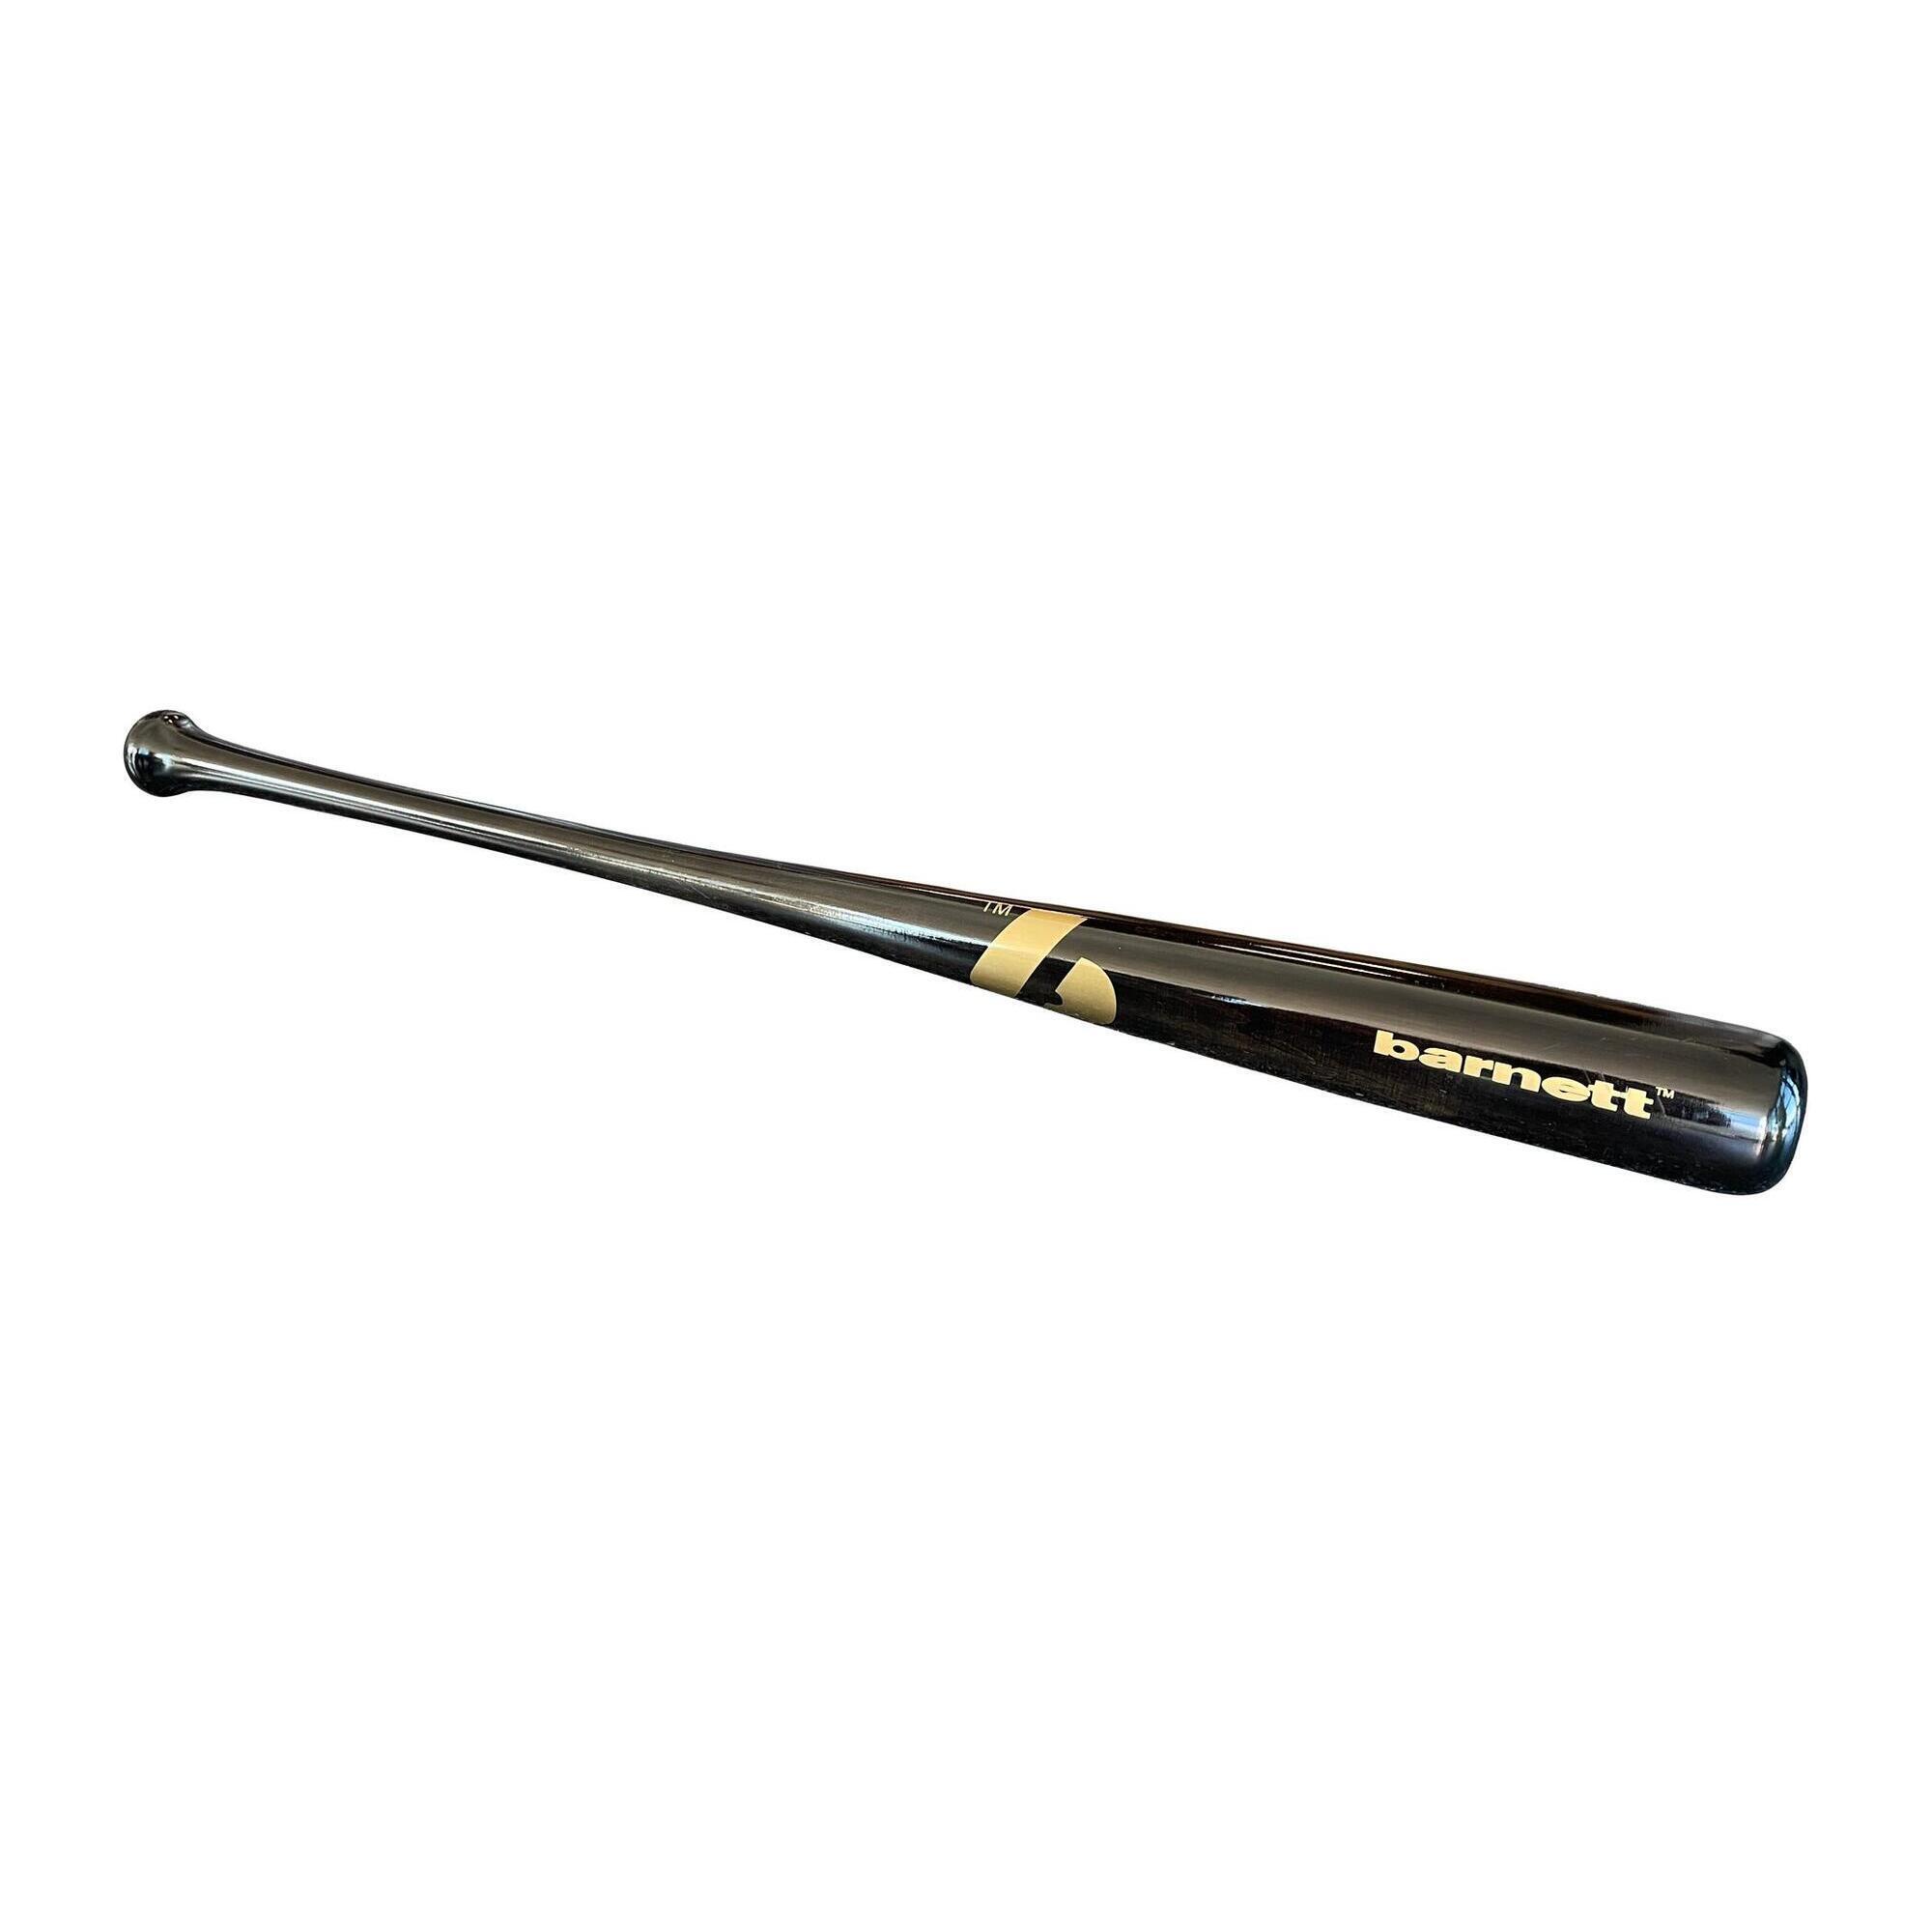 BARNETT  Pro baseball bat, model 210-4 BB-10 33"